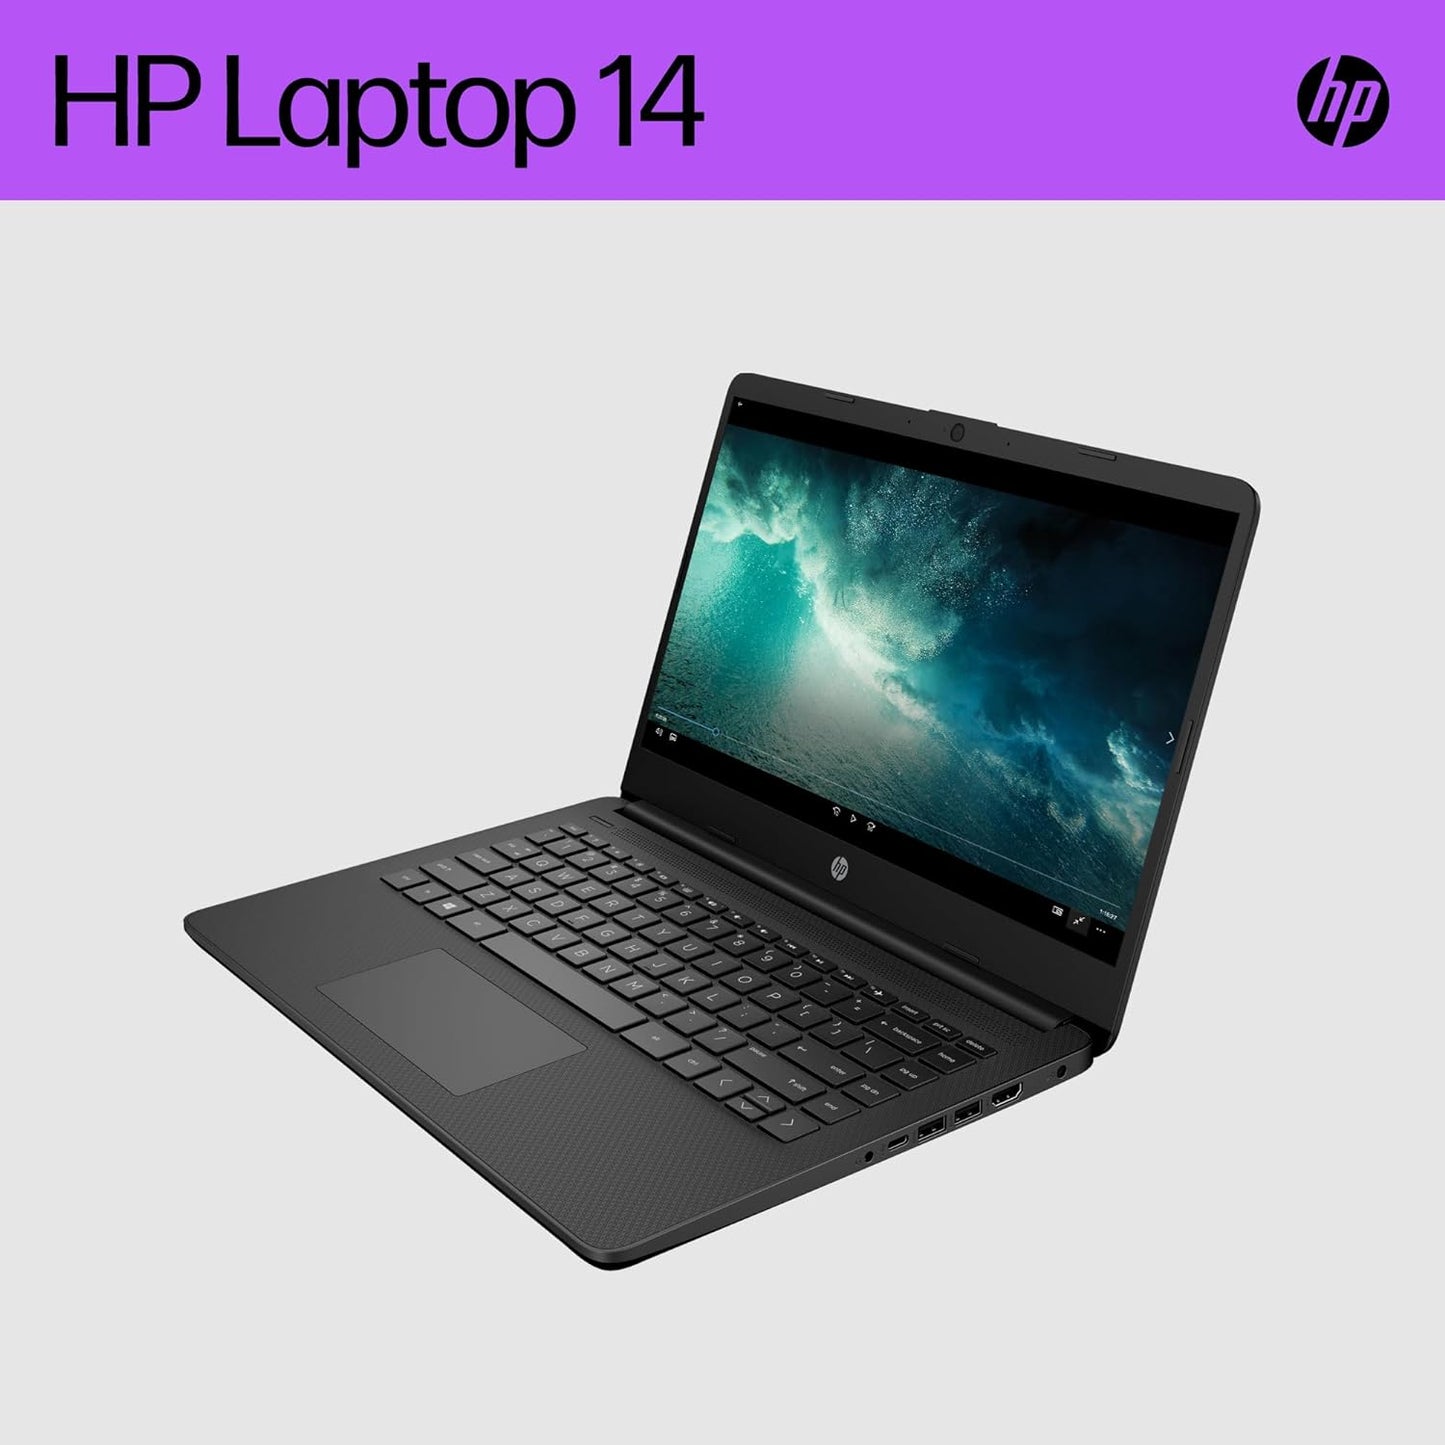 HP 14" Laptop- Intel Pentium CPU - 4GB RAM - 128GB SSD